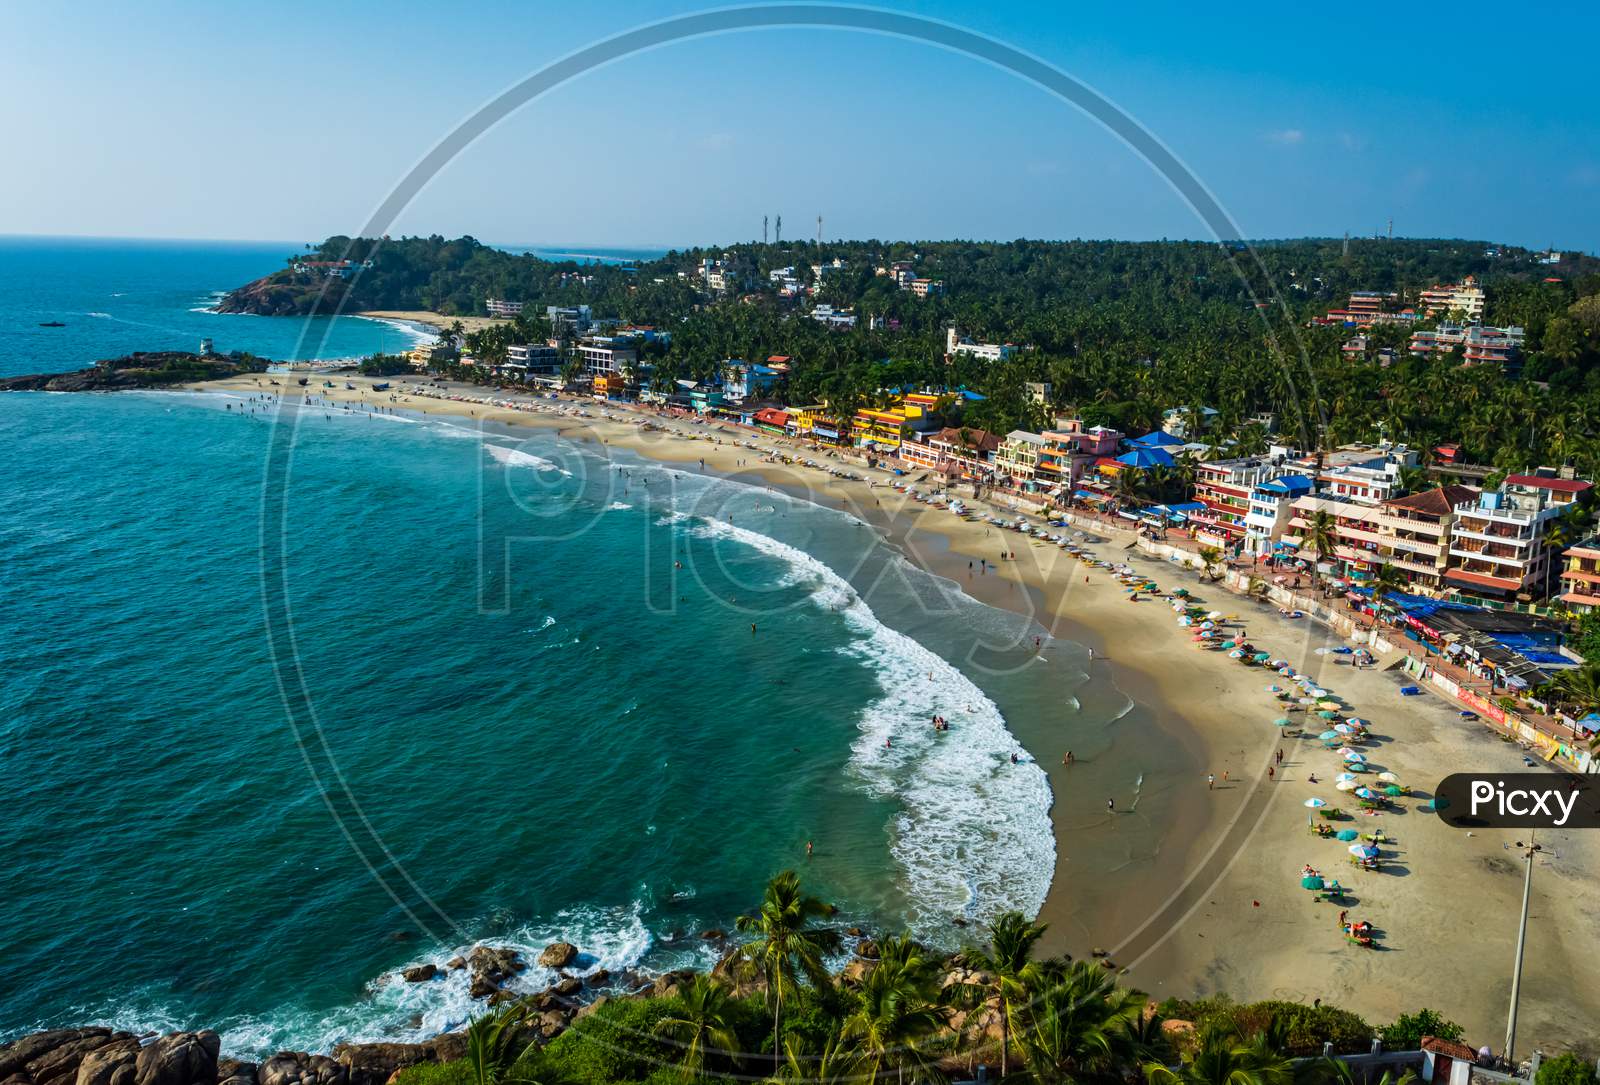 Beauty of Kerala beaches